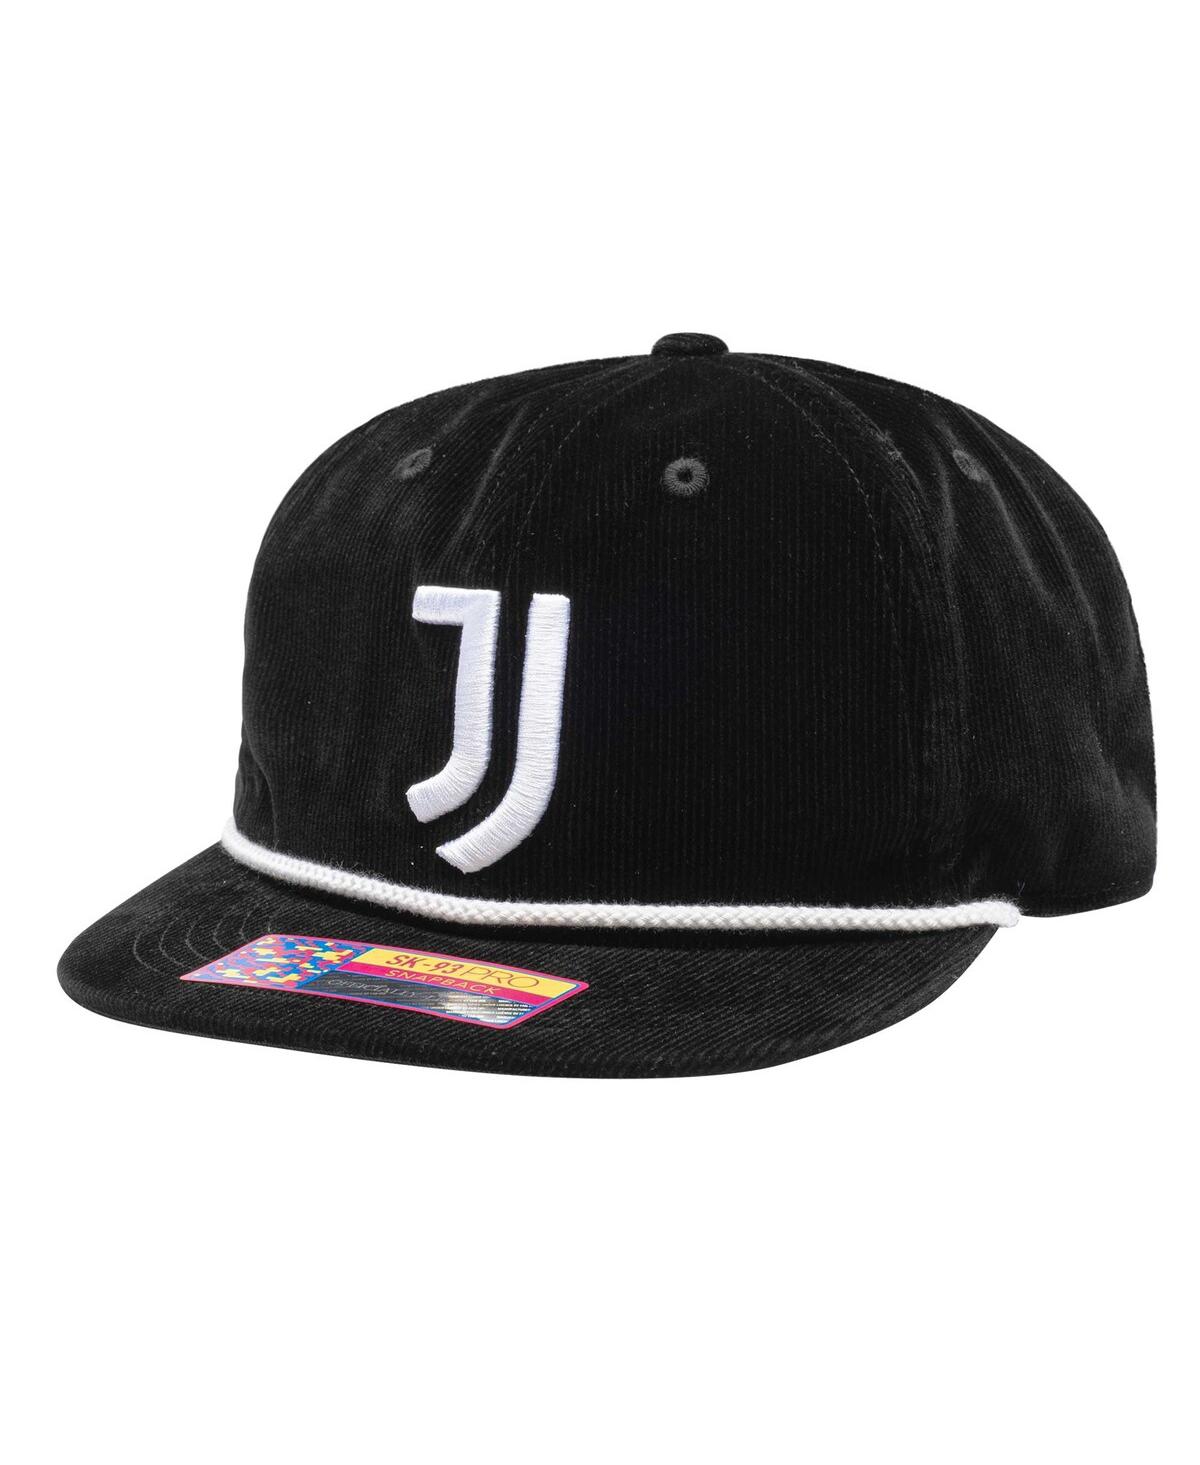 Shop Fan Ink Men's Black Juventus Snow Beach Adjustable Hat